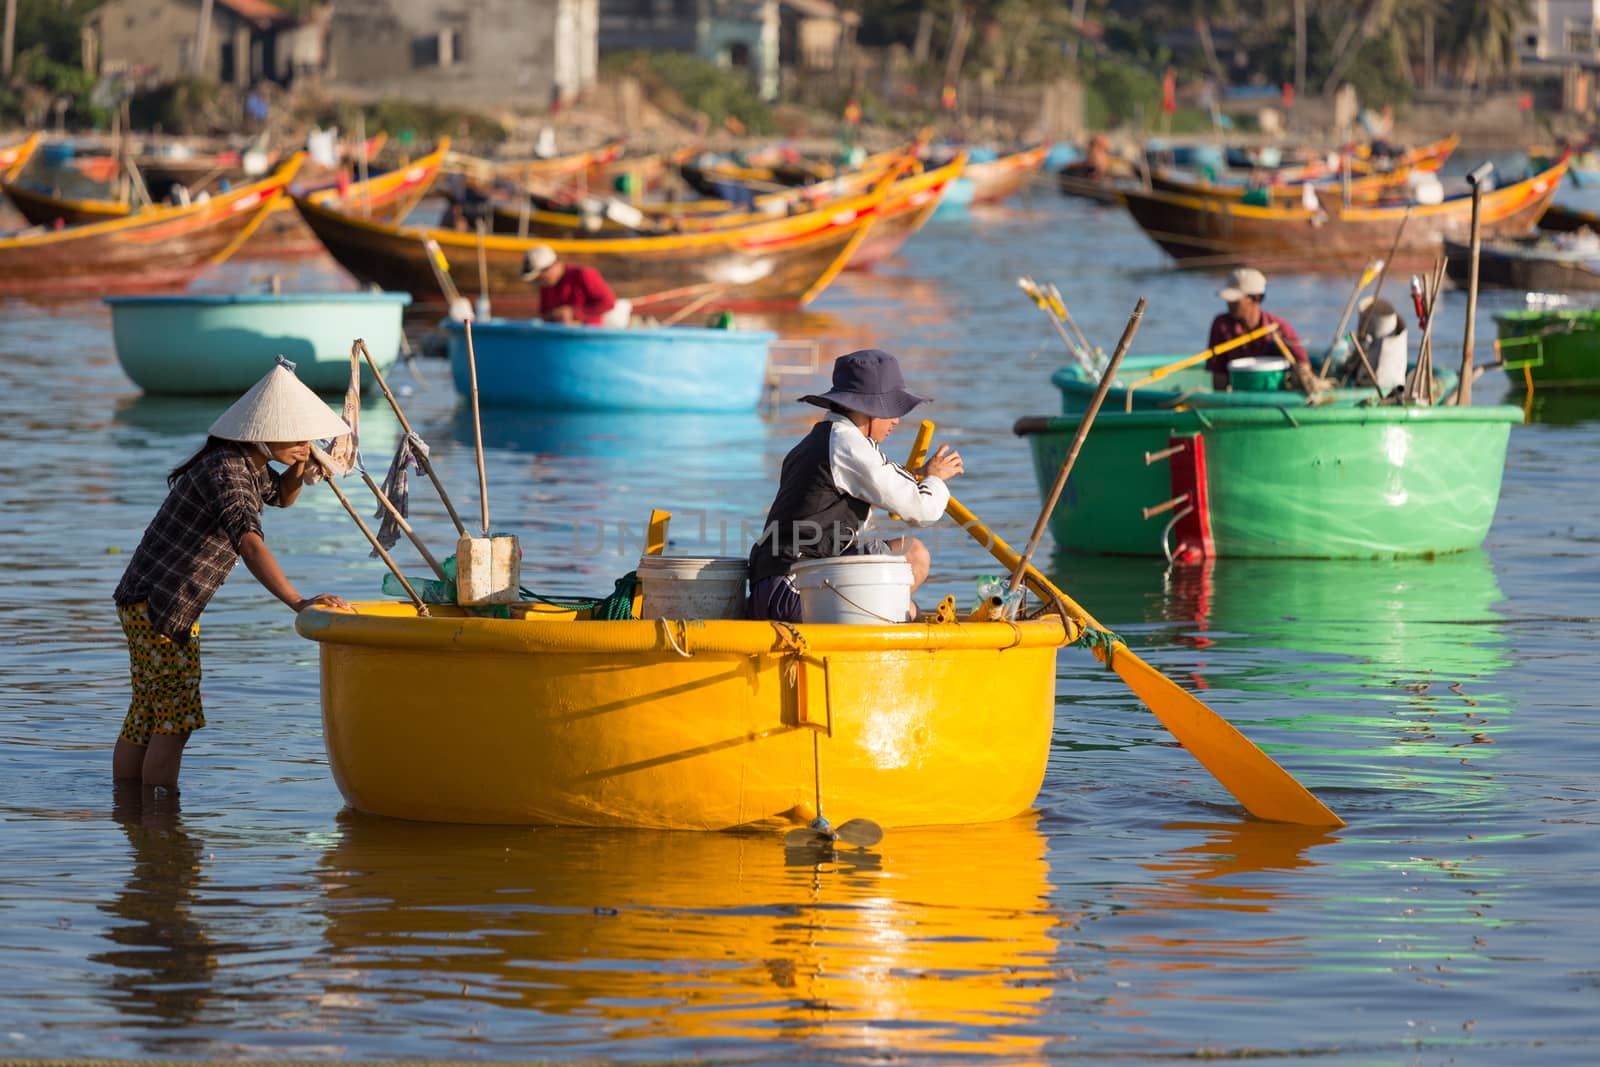 MUI NE, VIETNAM - FEBRUARY 08, 2014: Fishermen at work near Mui Ne - an upcoming touristic area in Southern Vietnam